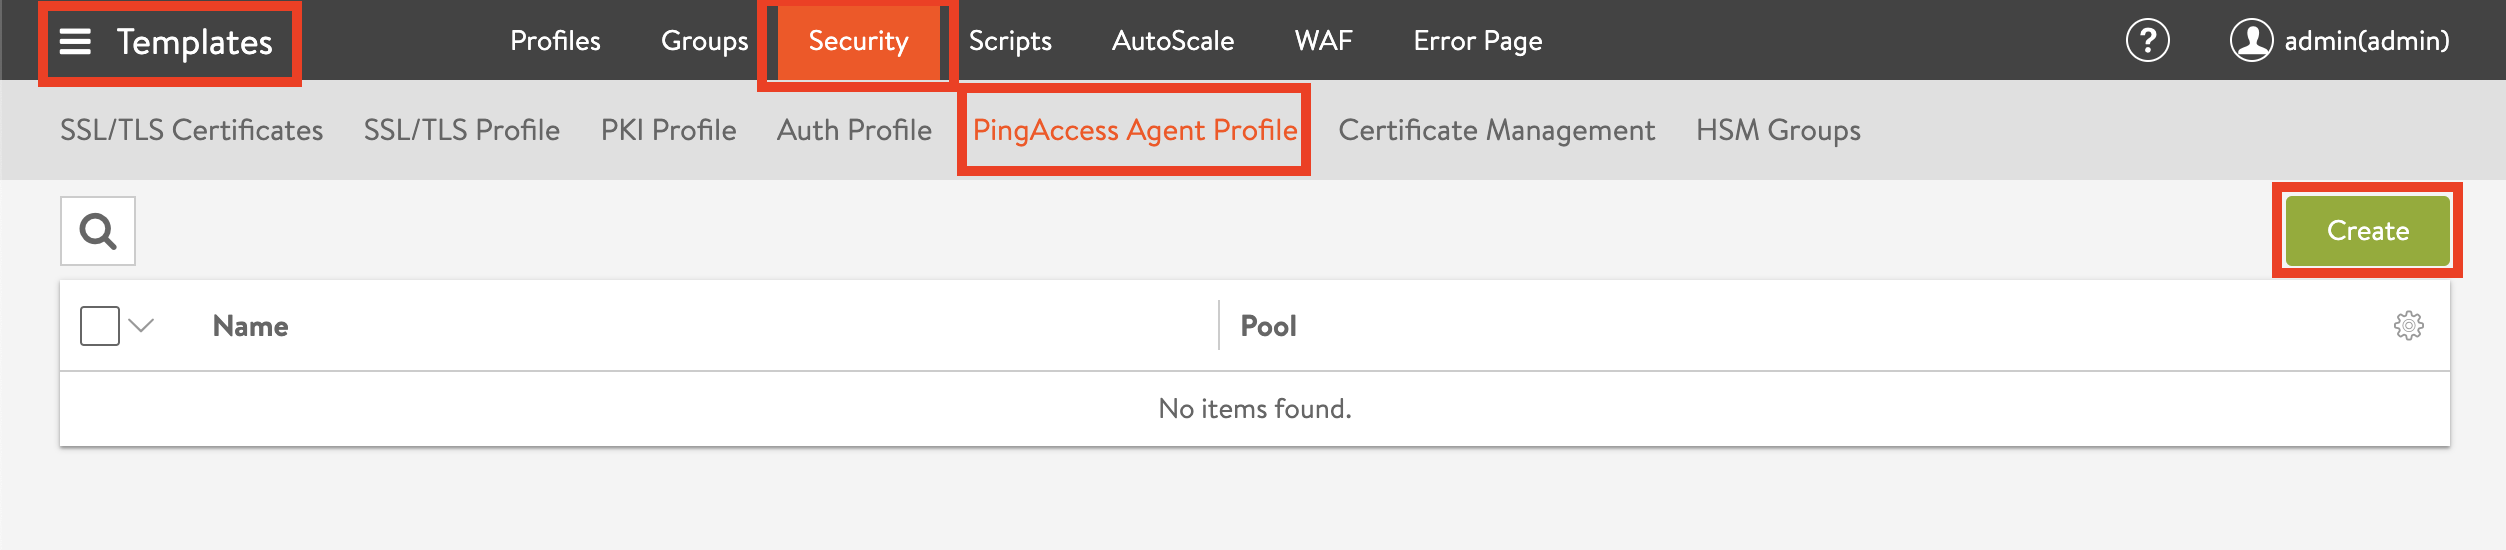 PingAccess Agent Profile